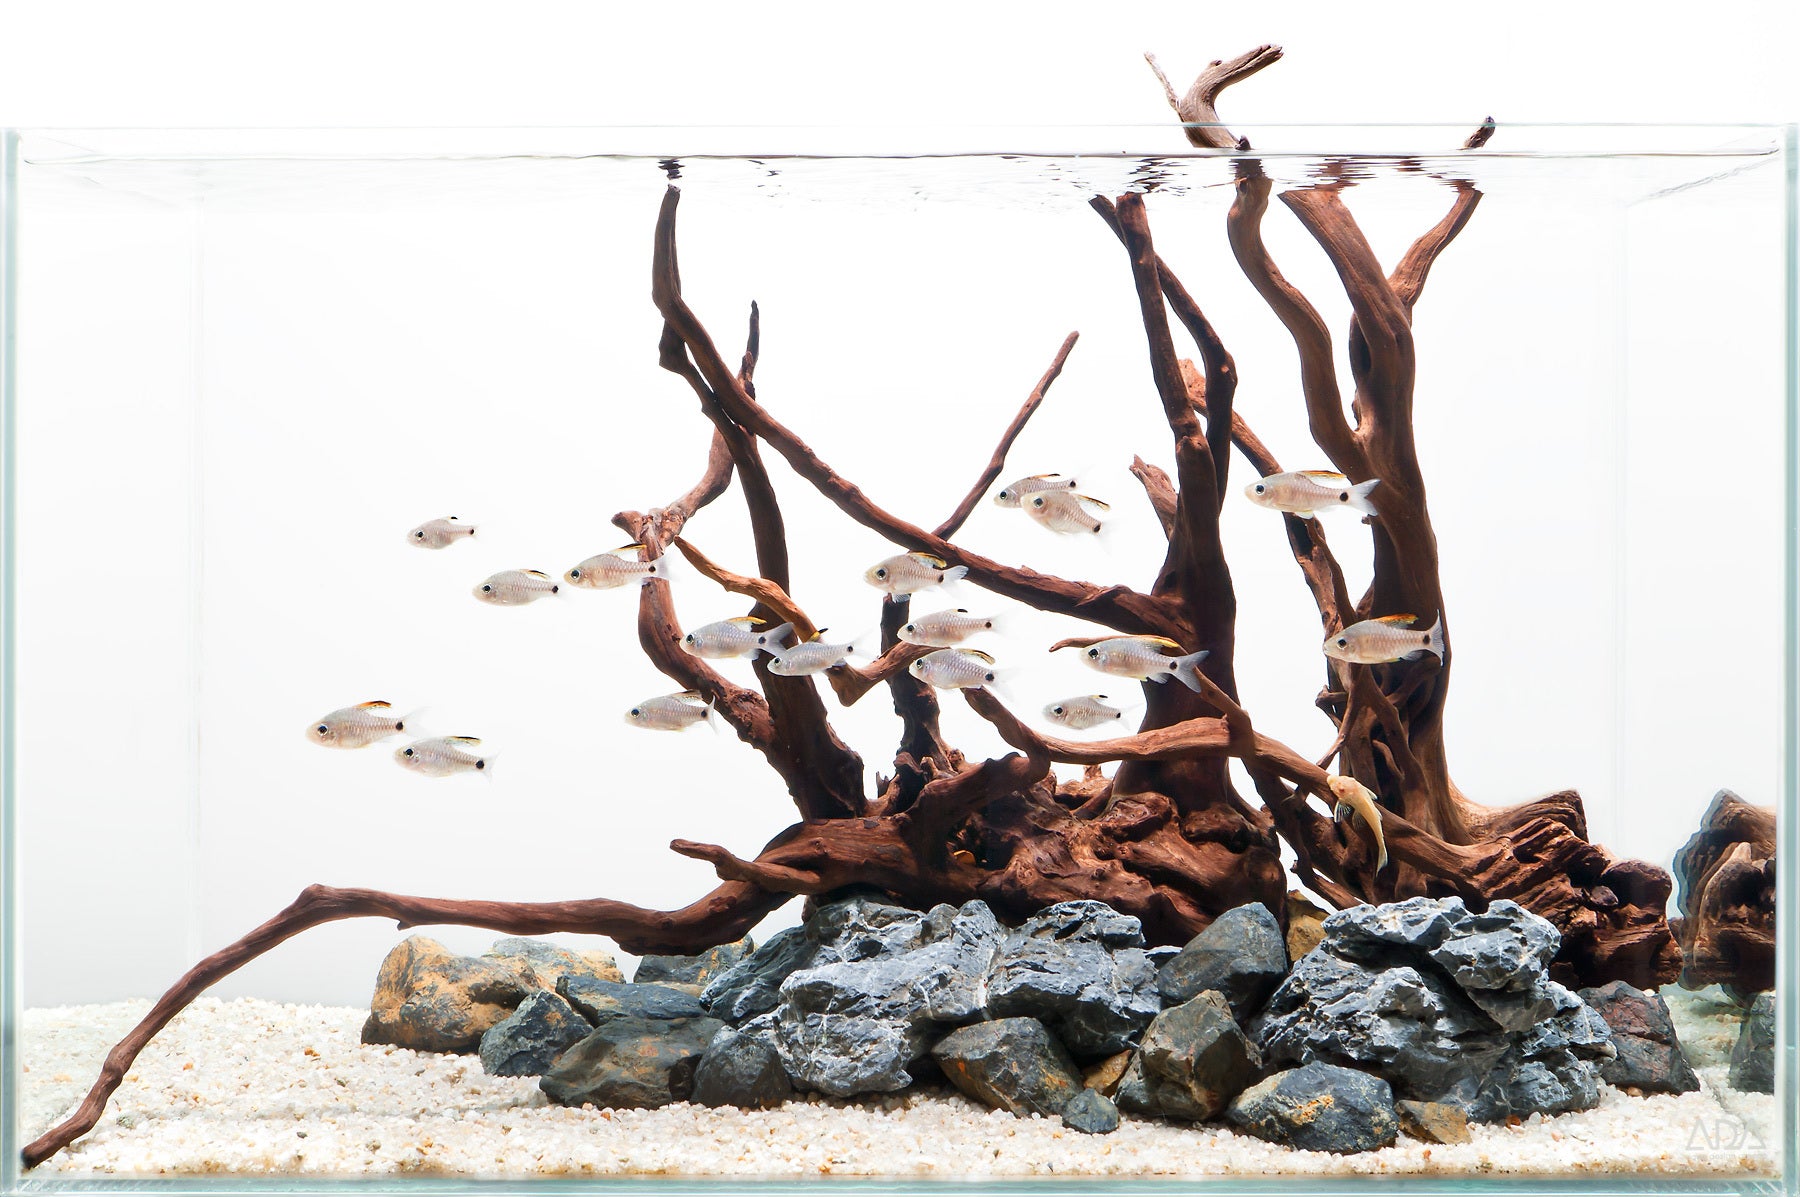 Aquarium driftwood